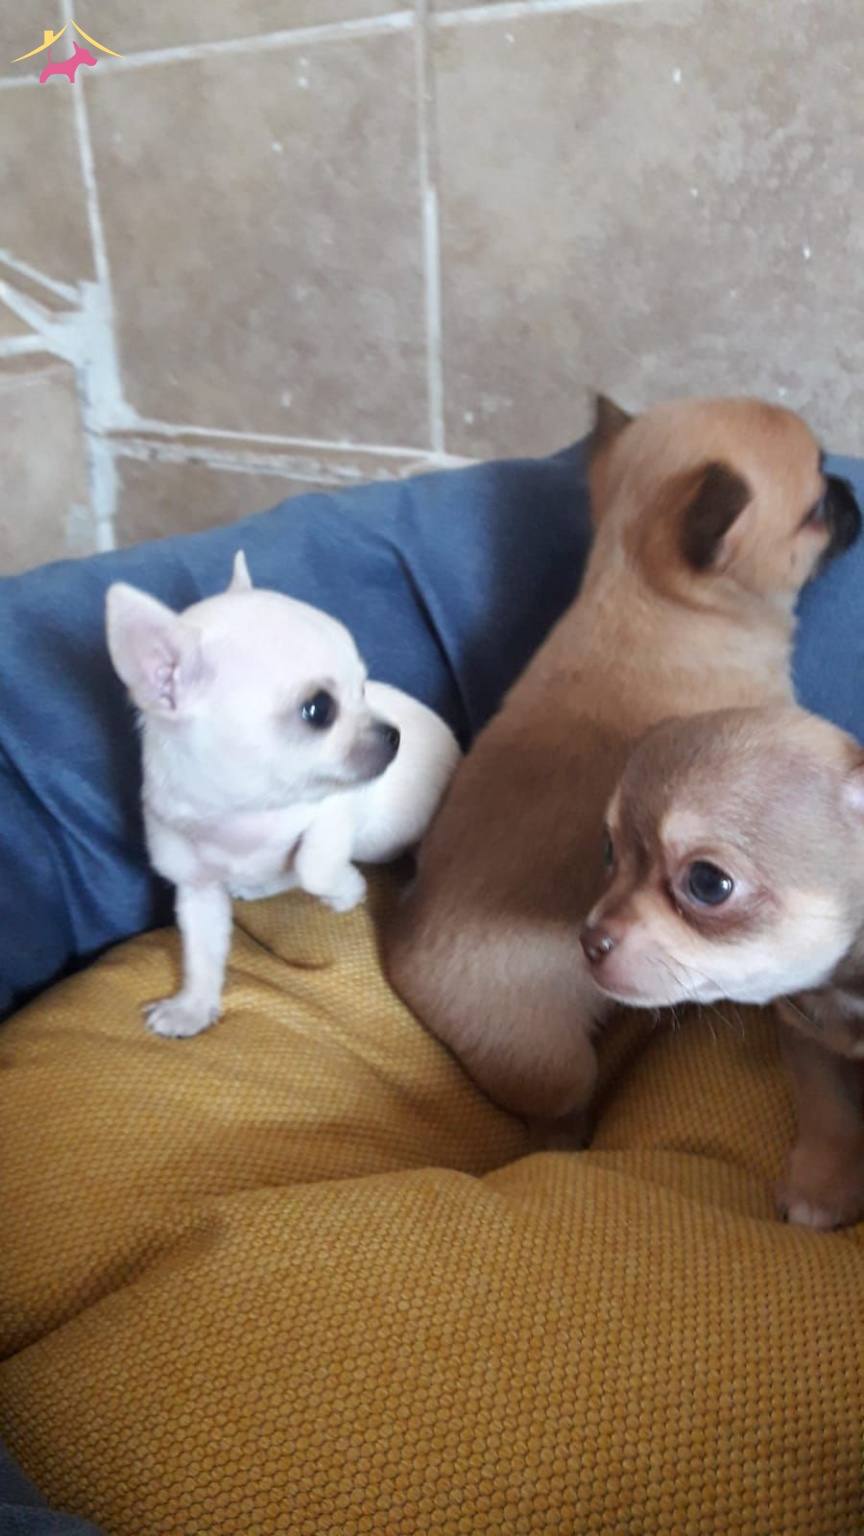 Akkus Uretim Ciftliginden Chihuahua Yavrulari Kopek Dunyasi 81194